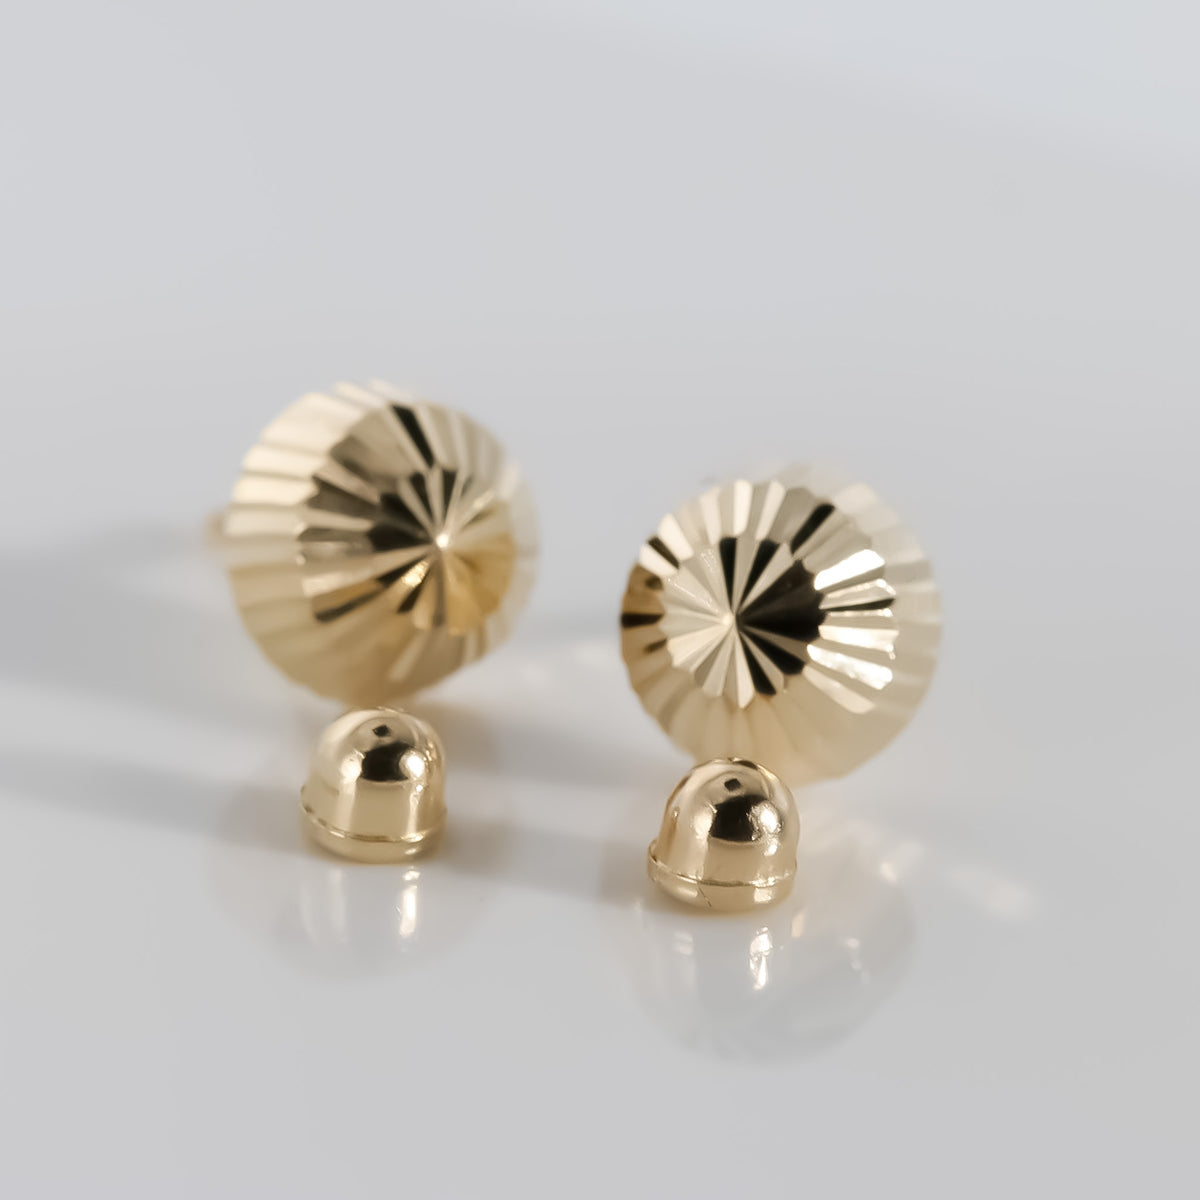 Buy Gold Stainless Steel Medium Round Dome Studs Online - Inox Jewelry India